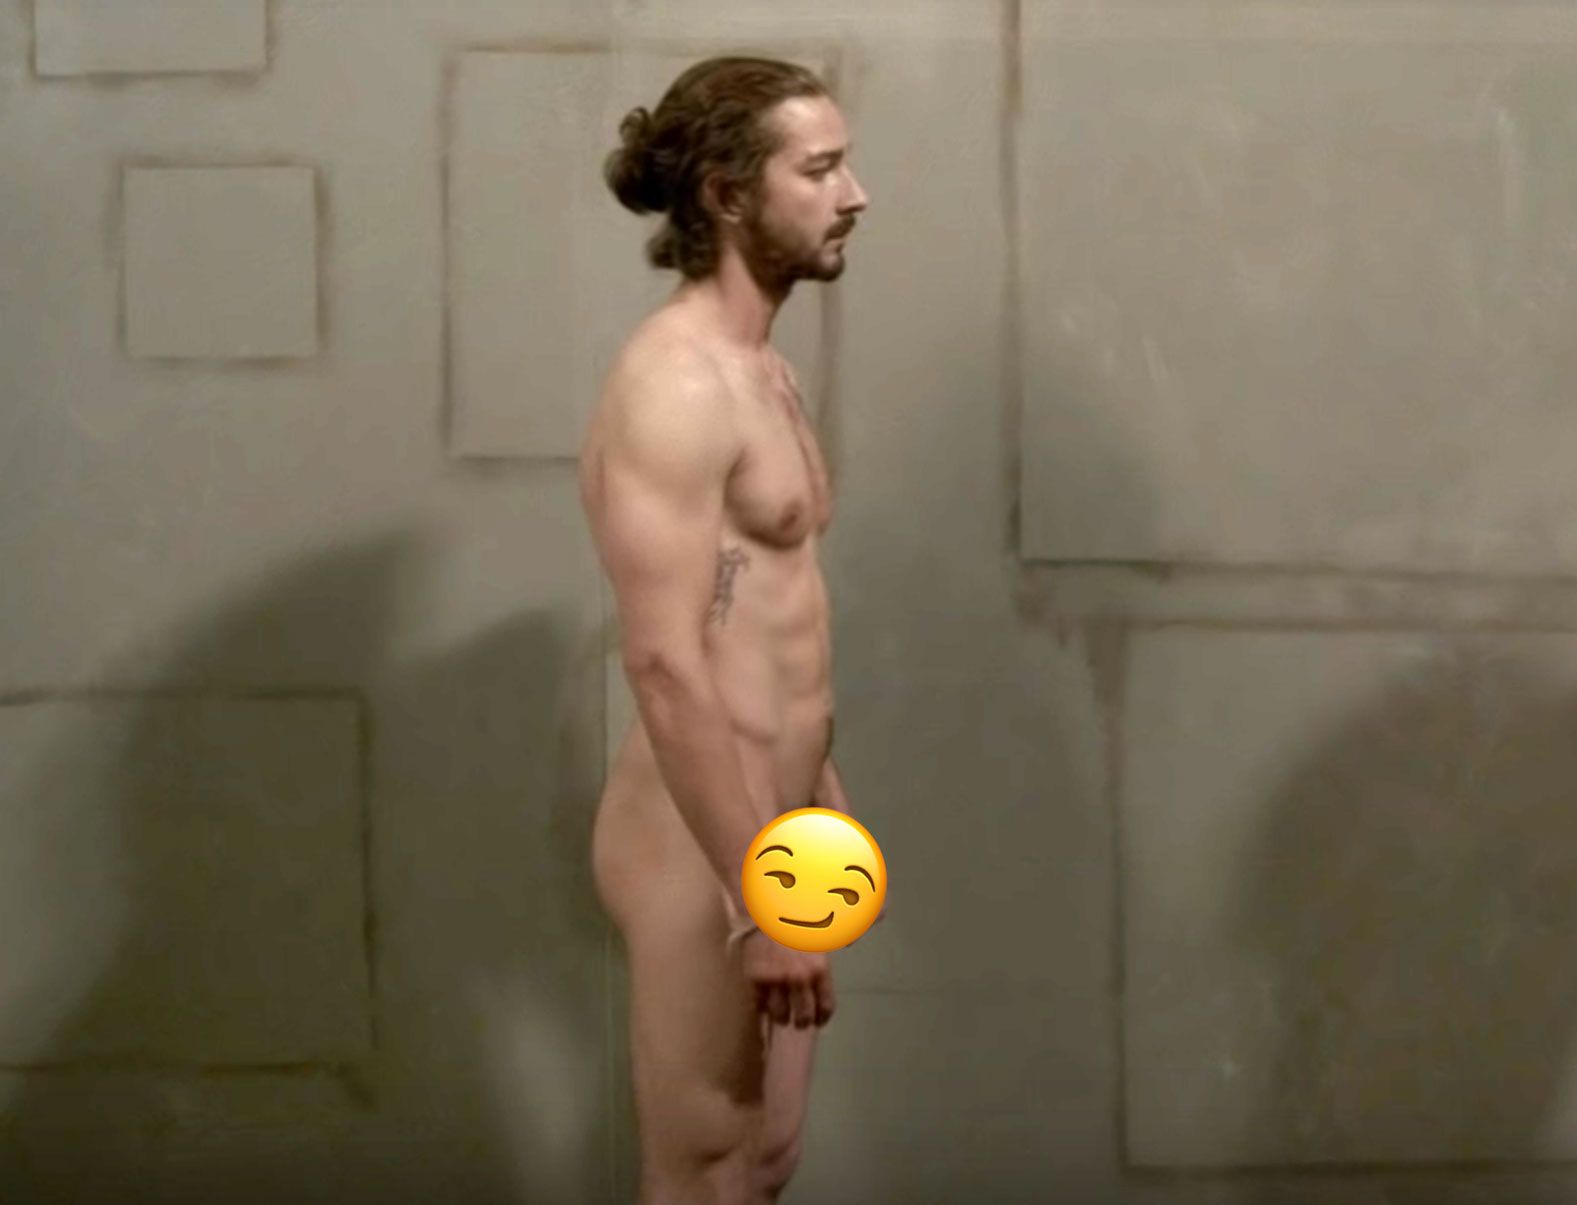 9 Disney Stars Who've Posed Nude - Disney Nude Instagrams